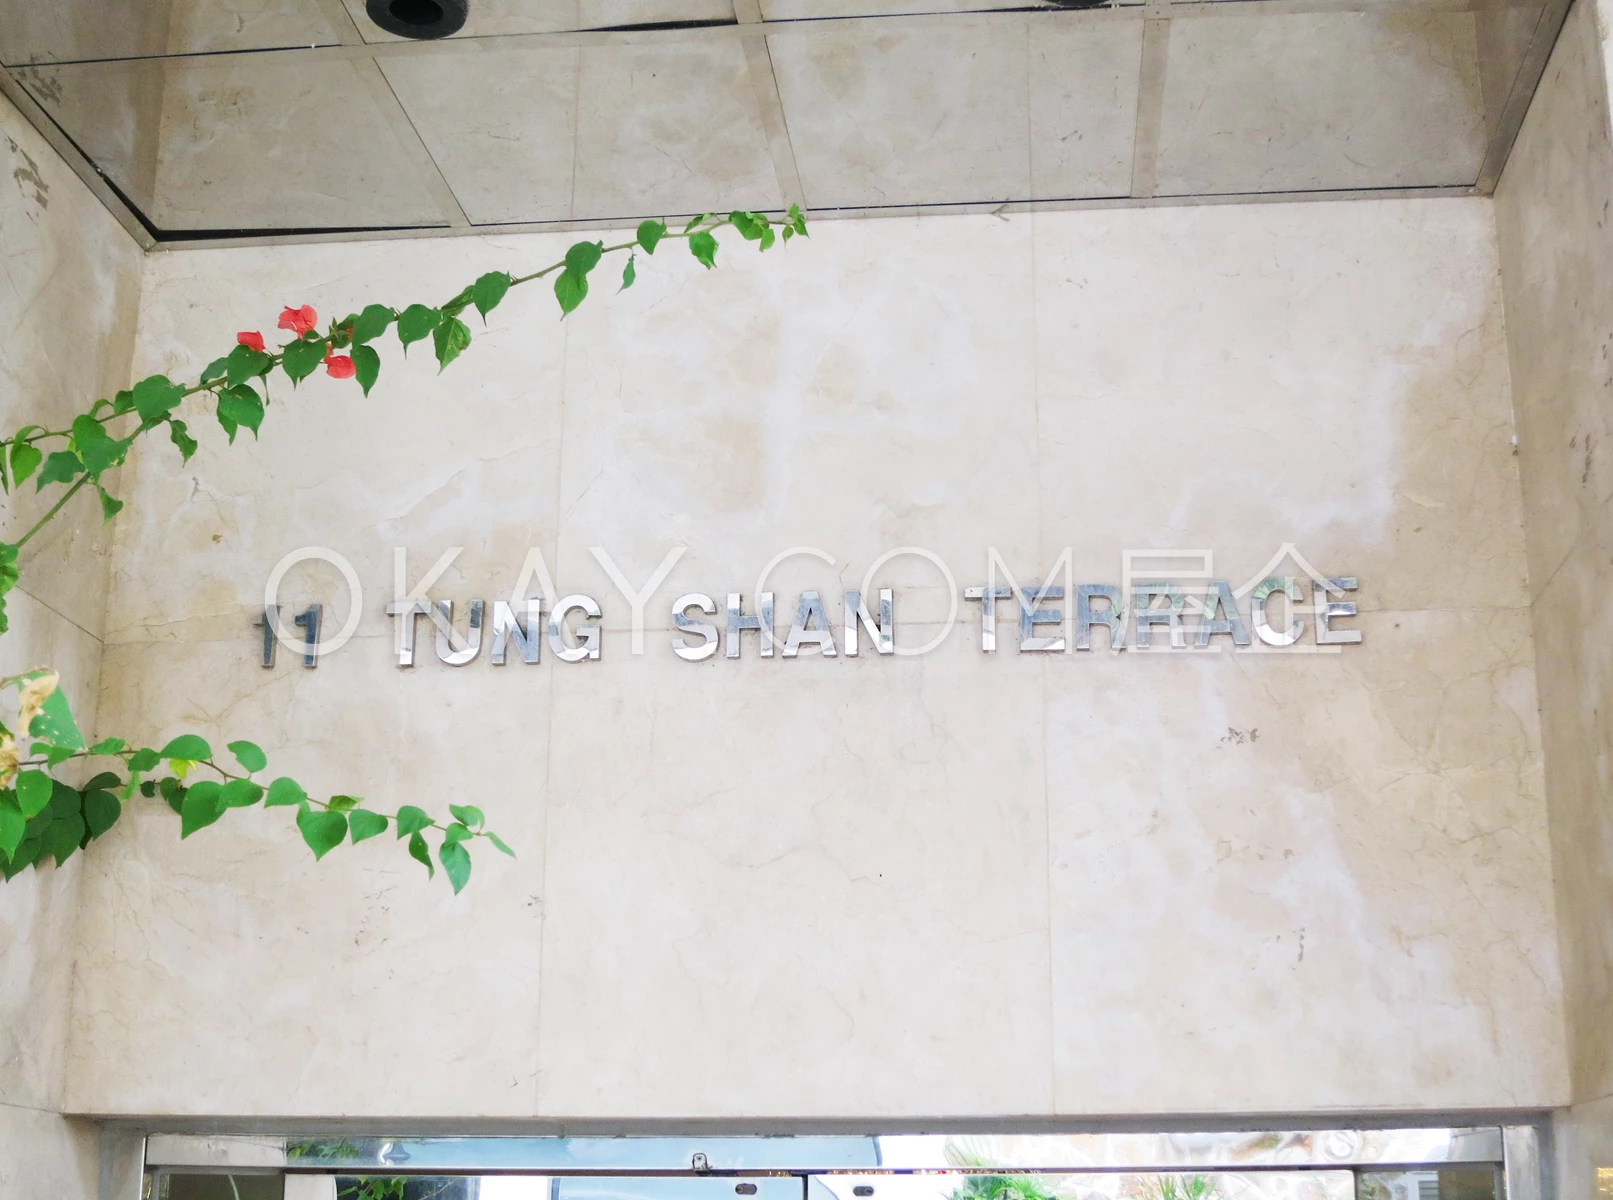 11 Tung Shan Terrace